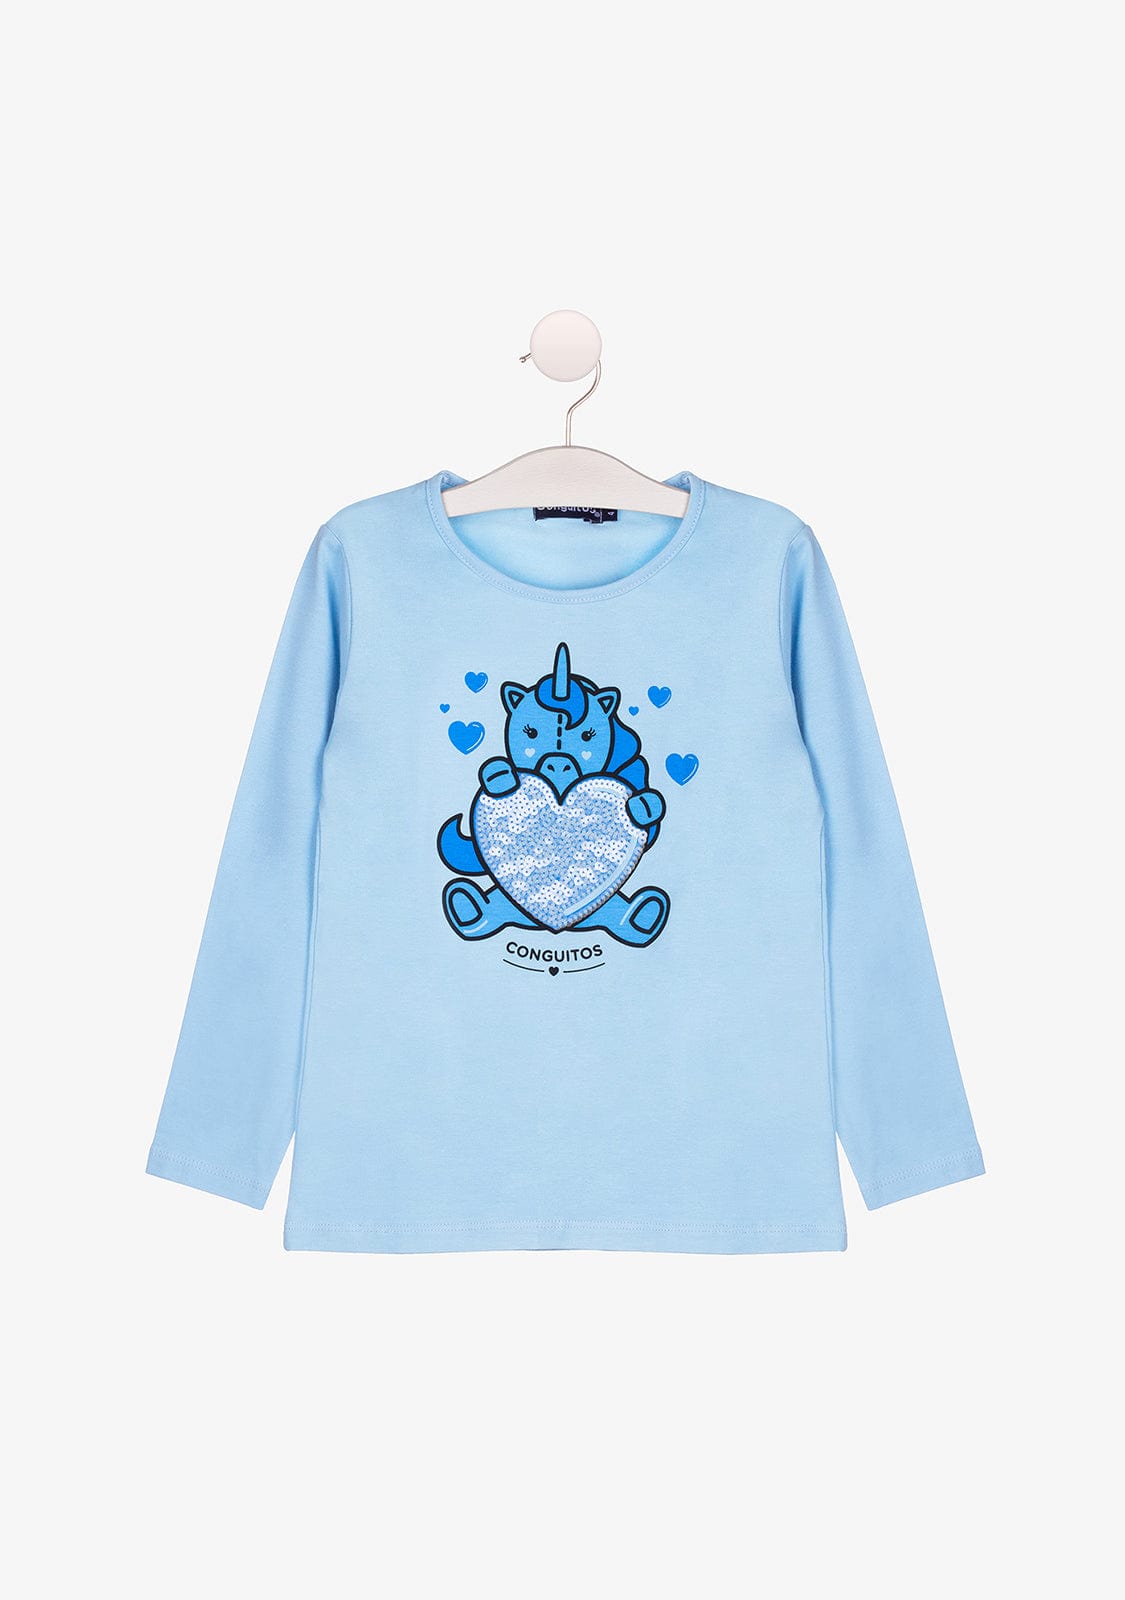 CONGUITOS TEXTIL Clothing Girl's Bluish Unicorn Shirt